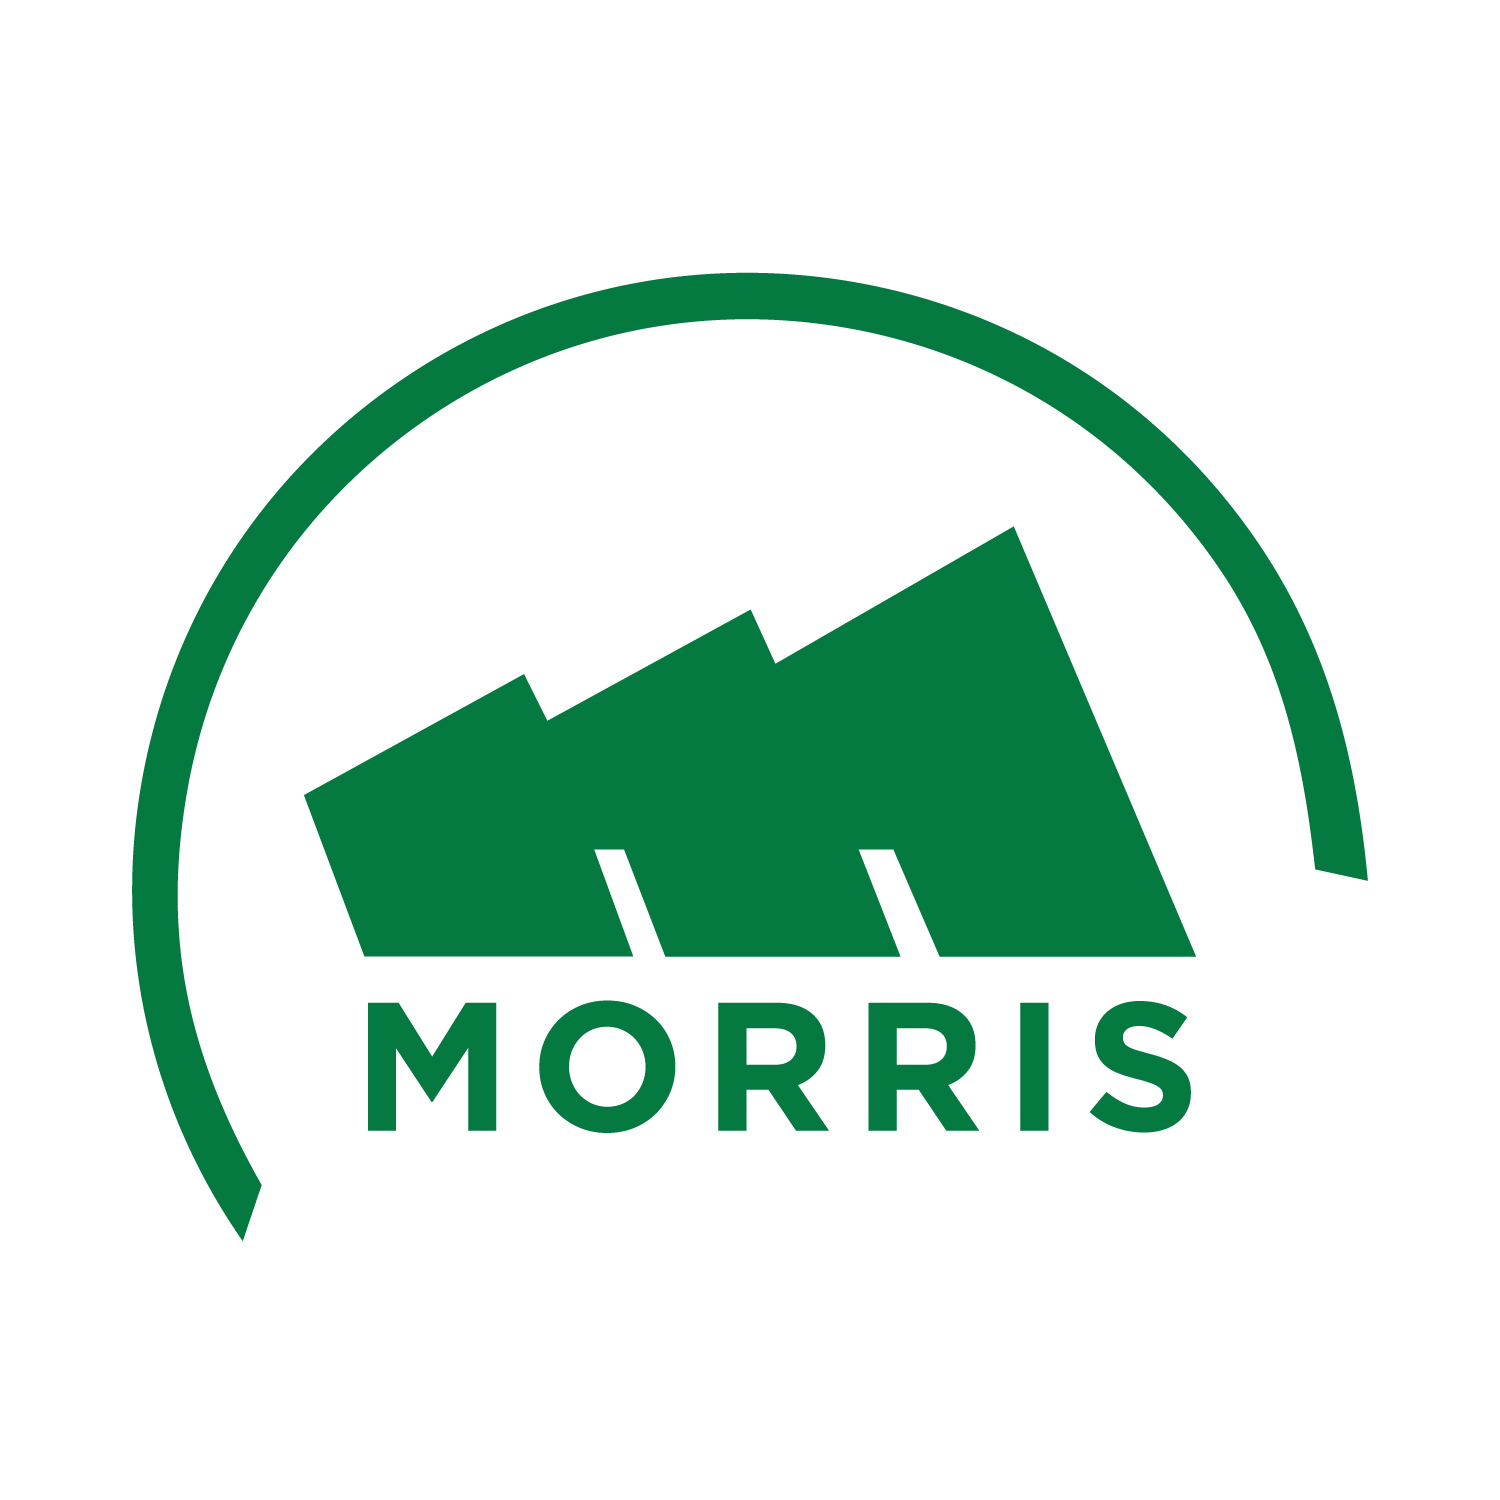 MorrisSE Logo-Main-HiRes.jpg